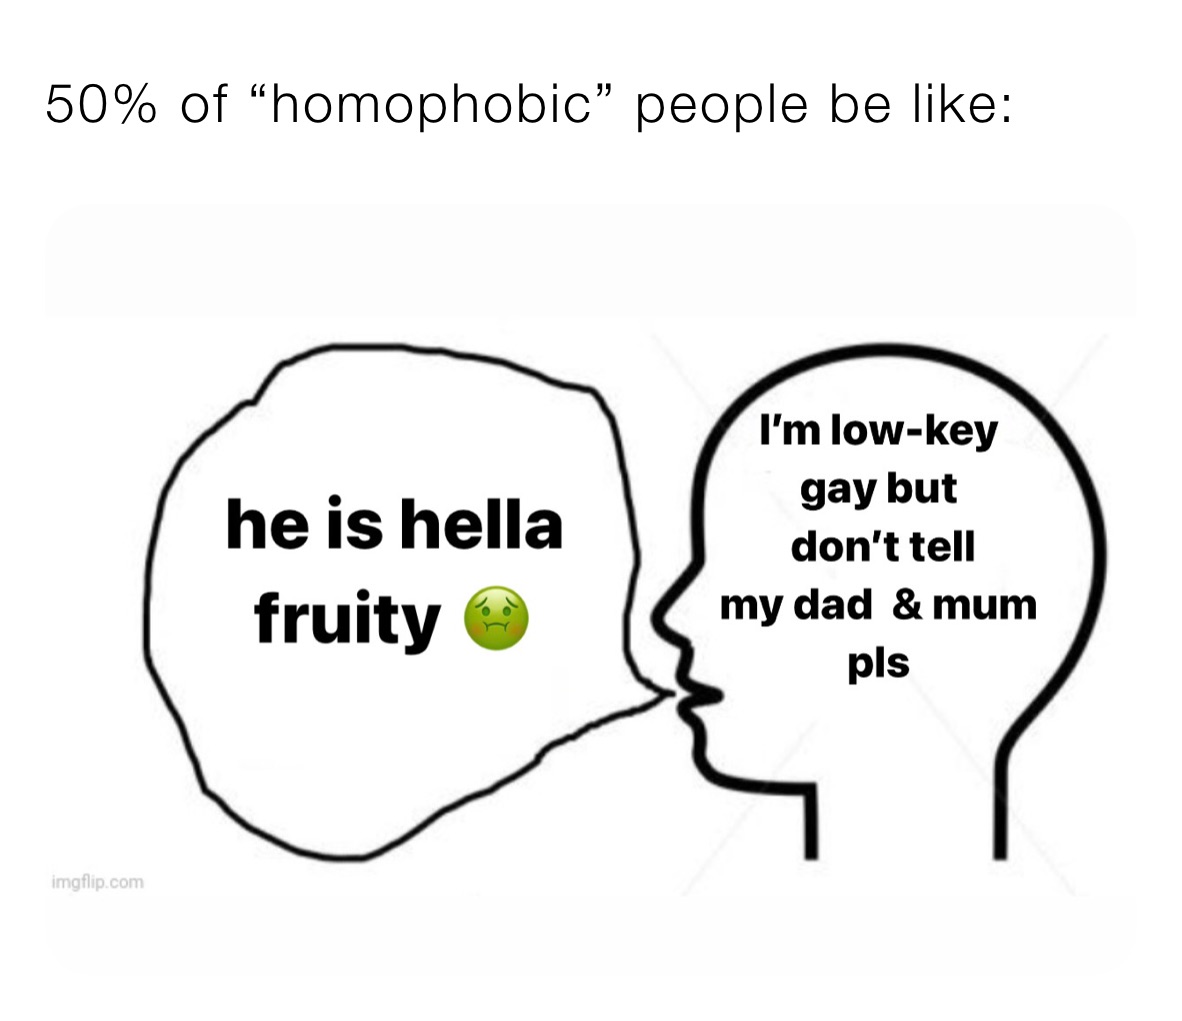 50% of “homophobic” people be like: